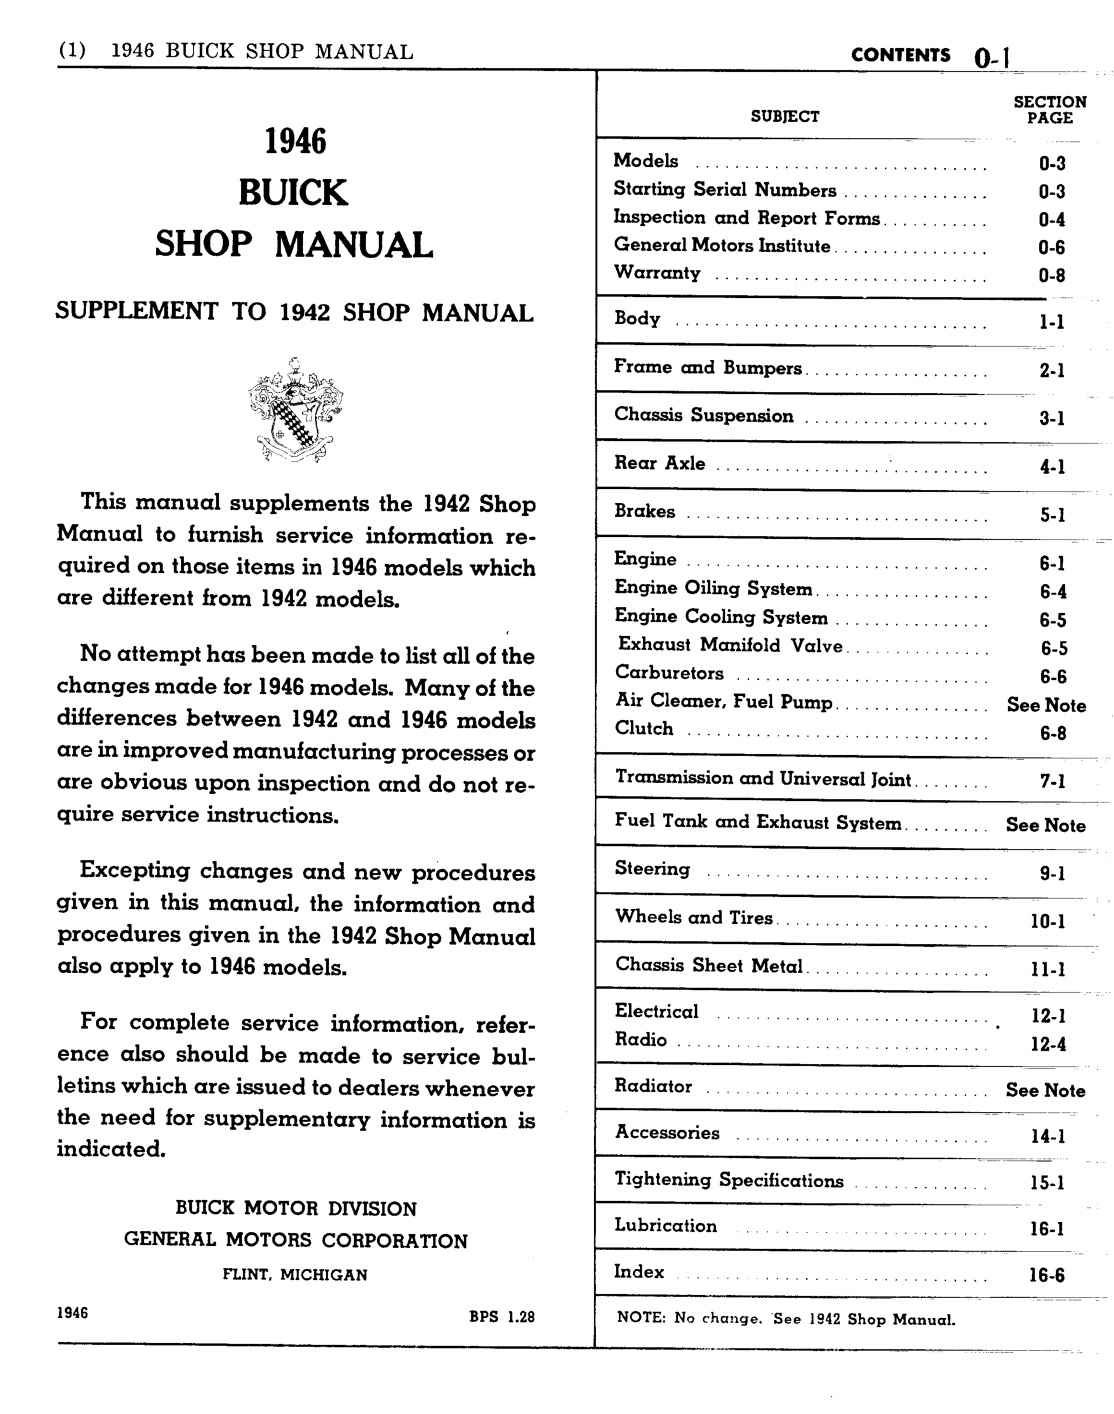 n_01 1946 Buick Shop Manual - Gen Information-002-002.jpg